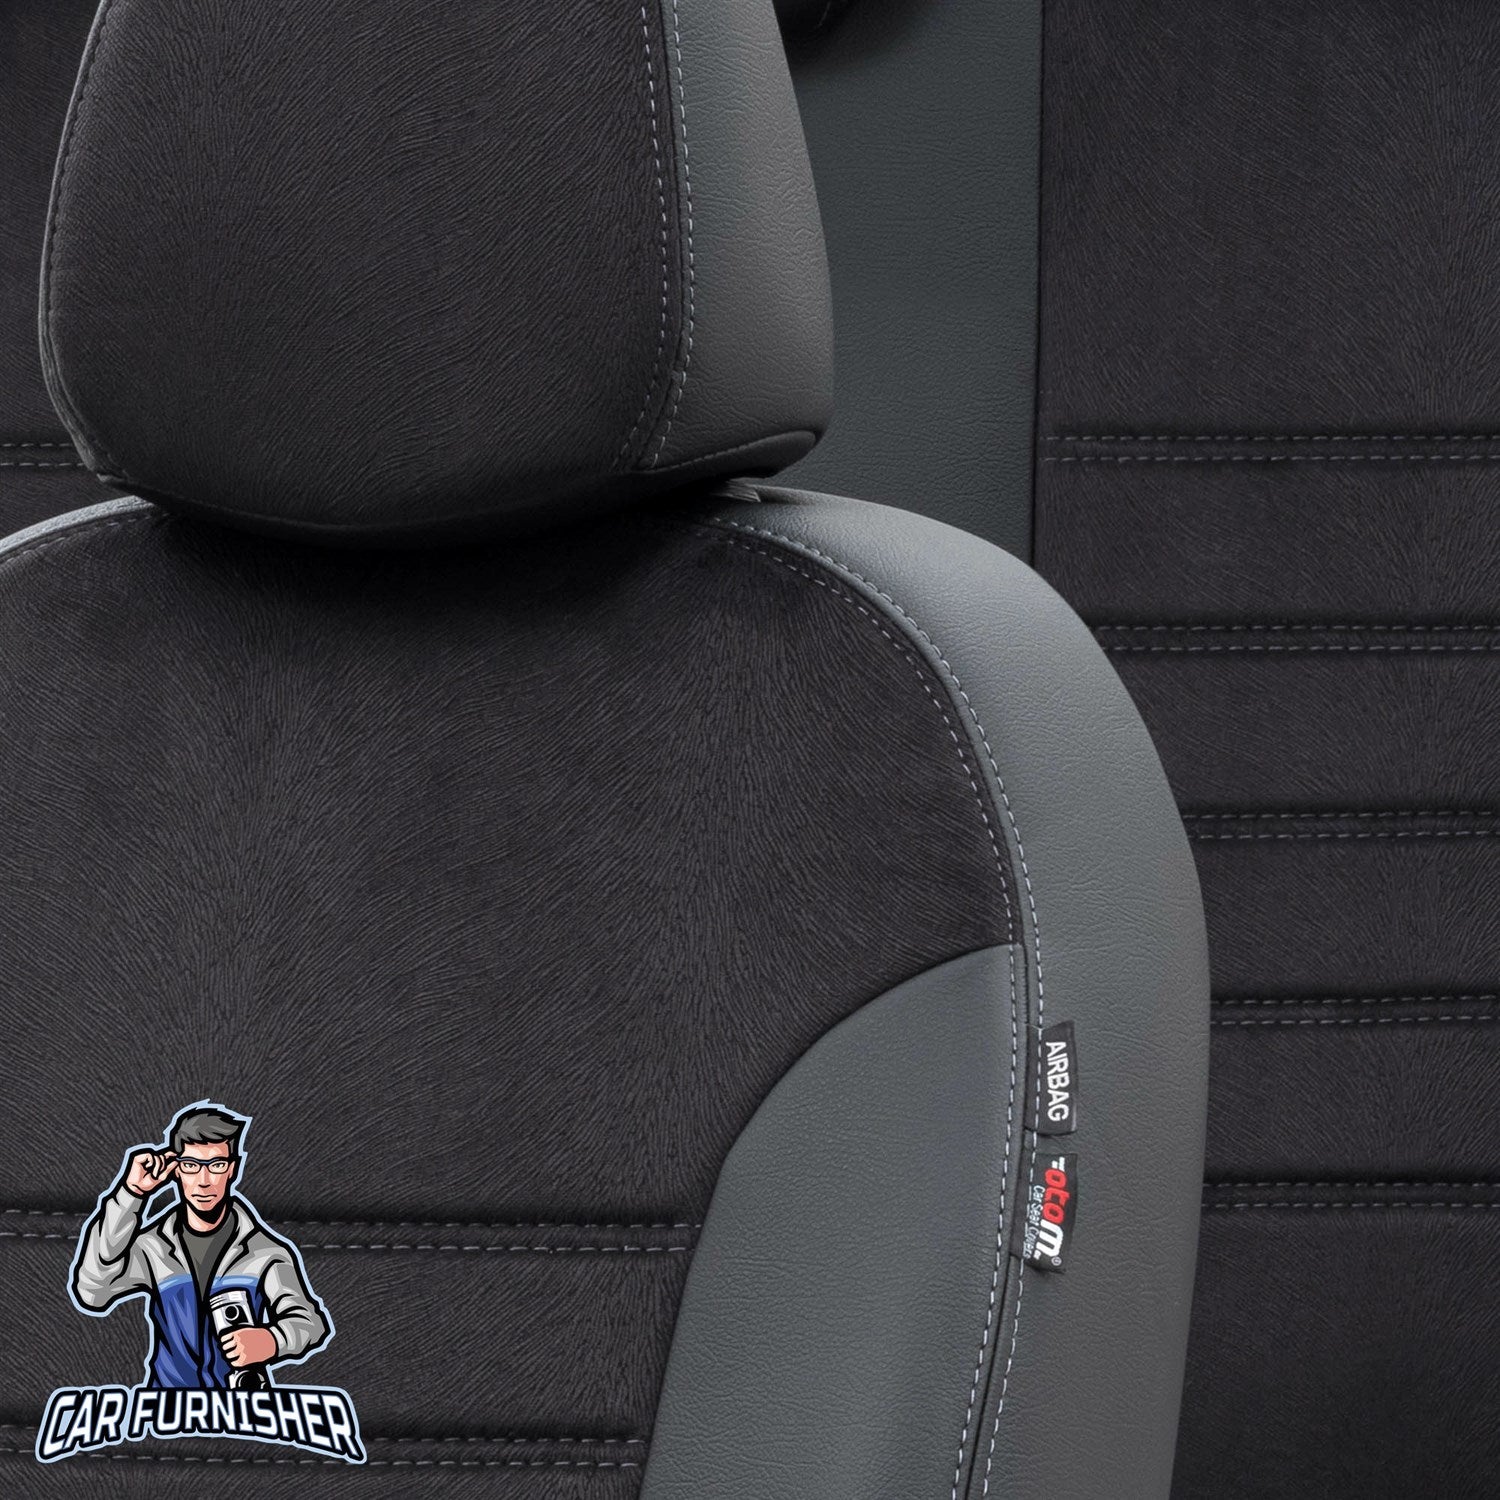 Volvo V50 Car Seat Cover 2004-2012 MW/T5 London Design Black Full Set (5 Seats + Handrest) Leather & Fabric